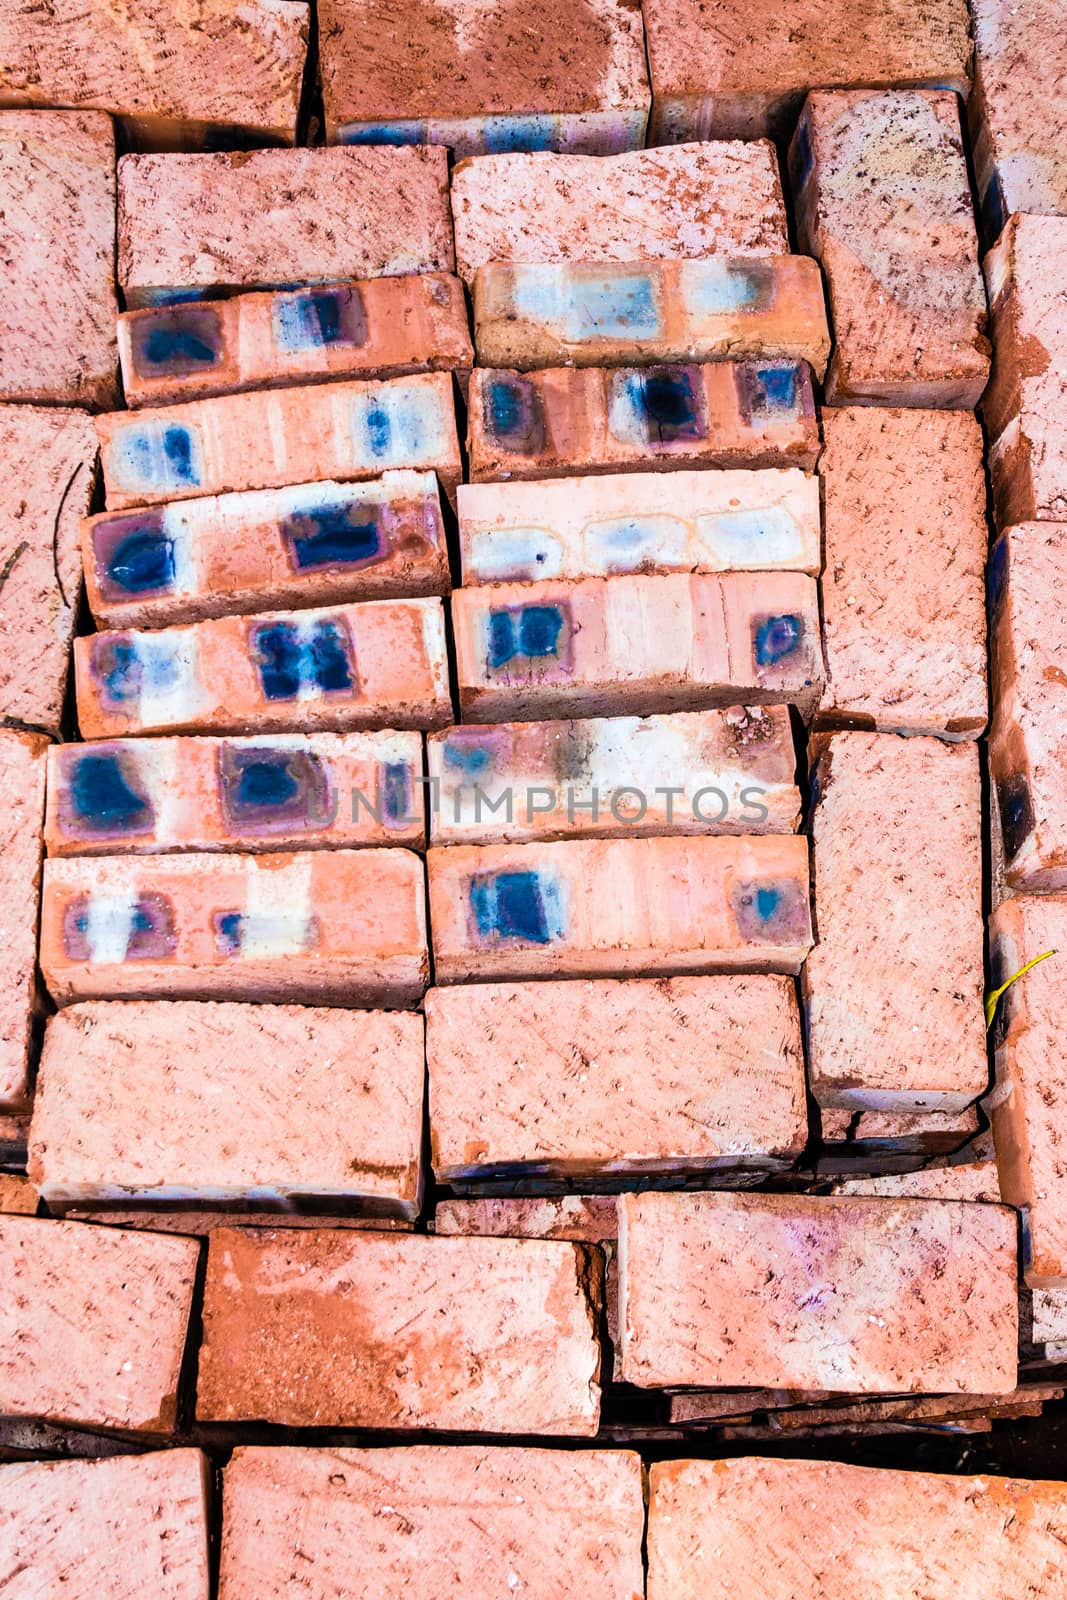 Bricks by JFJacobsz